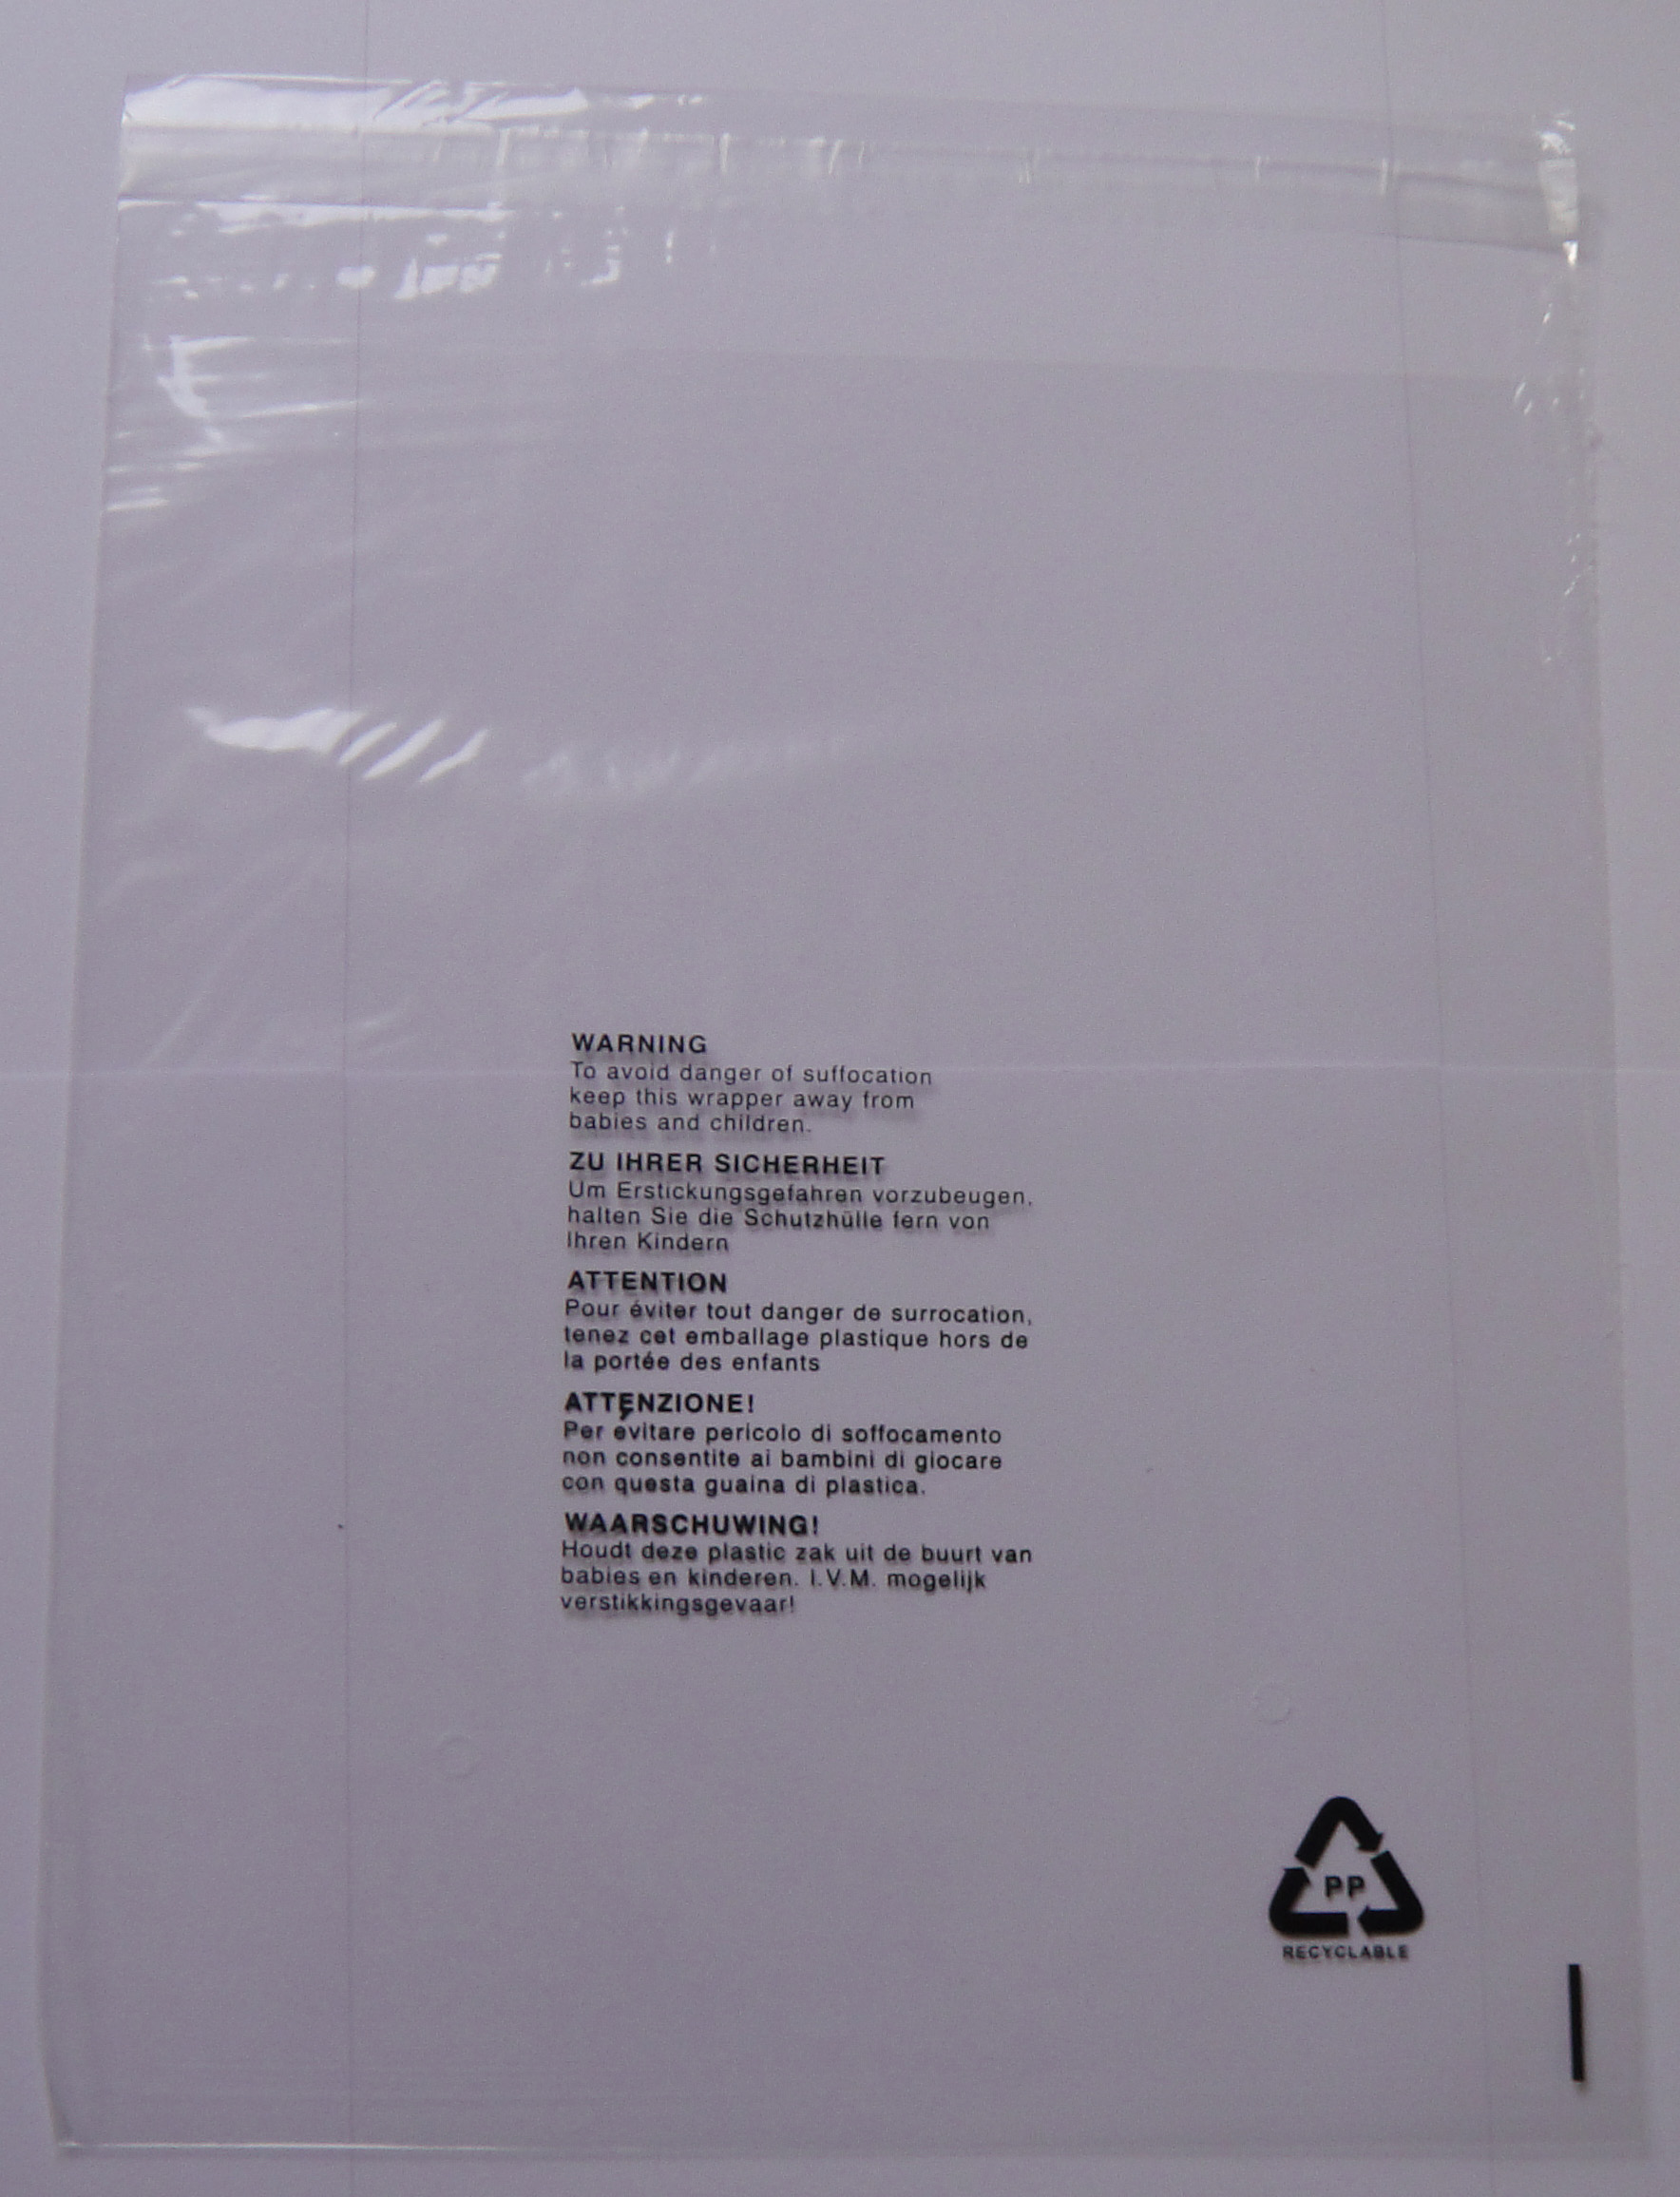 100x Garment t-shirts Packing Polypropylene Resealable Bags Textile/Clothing 